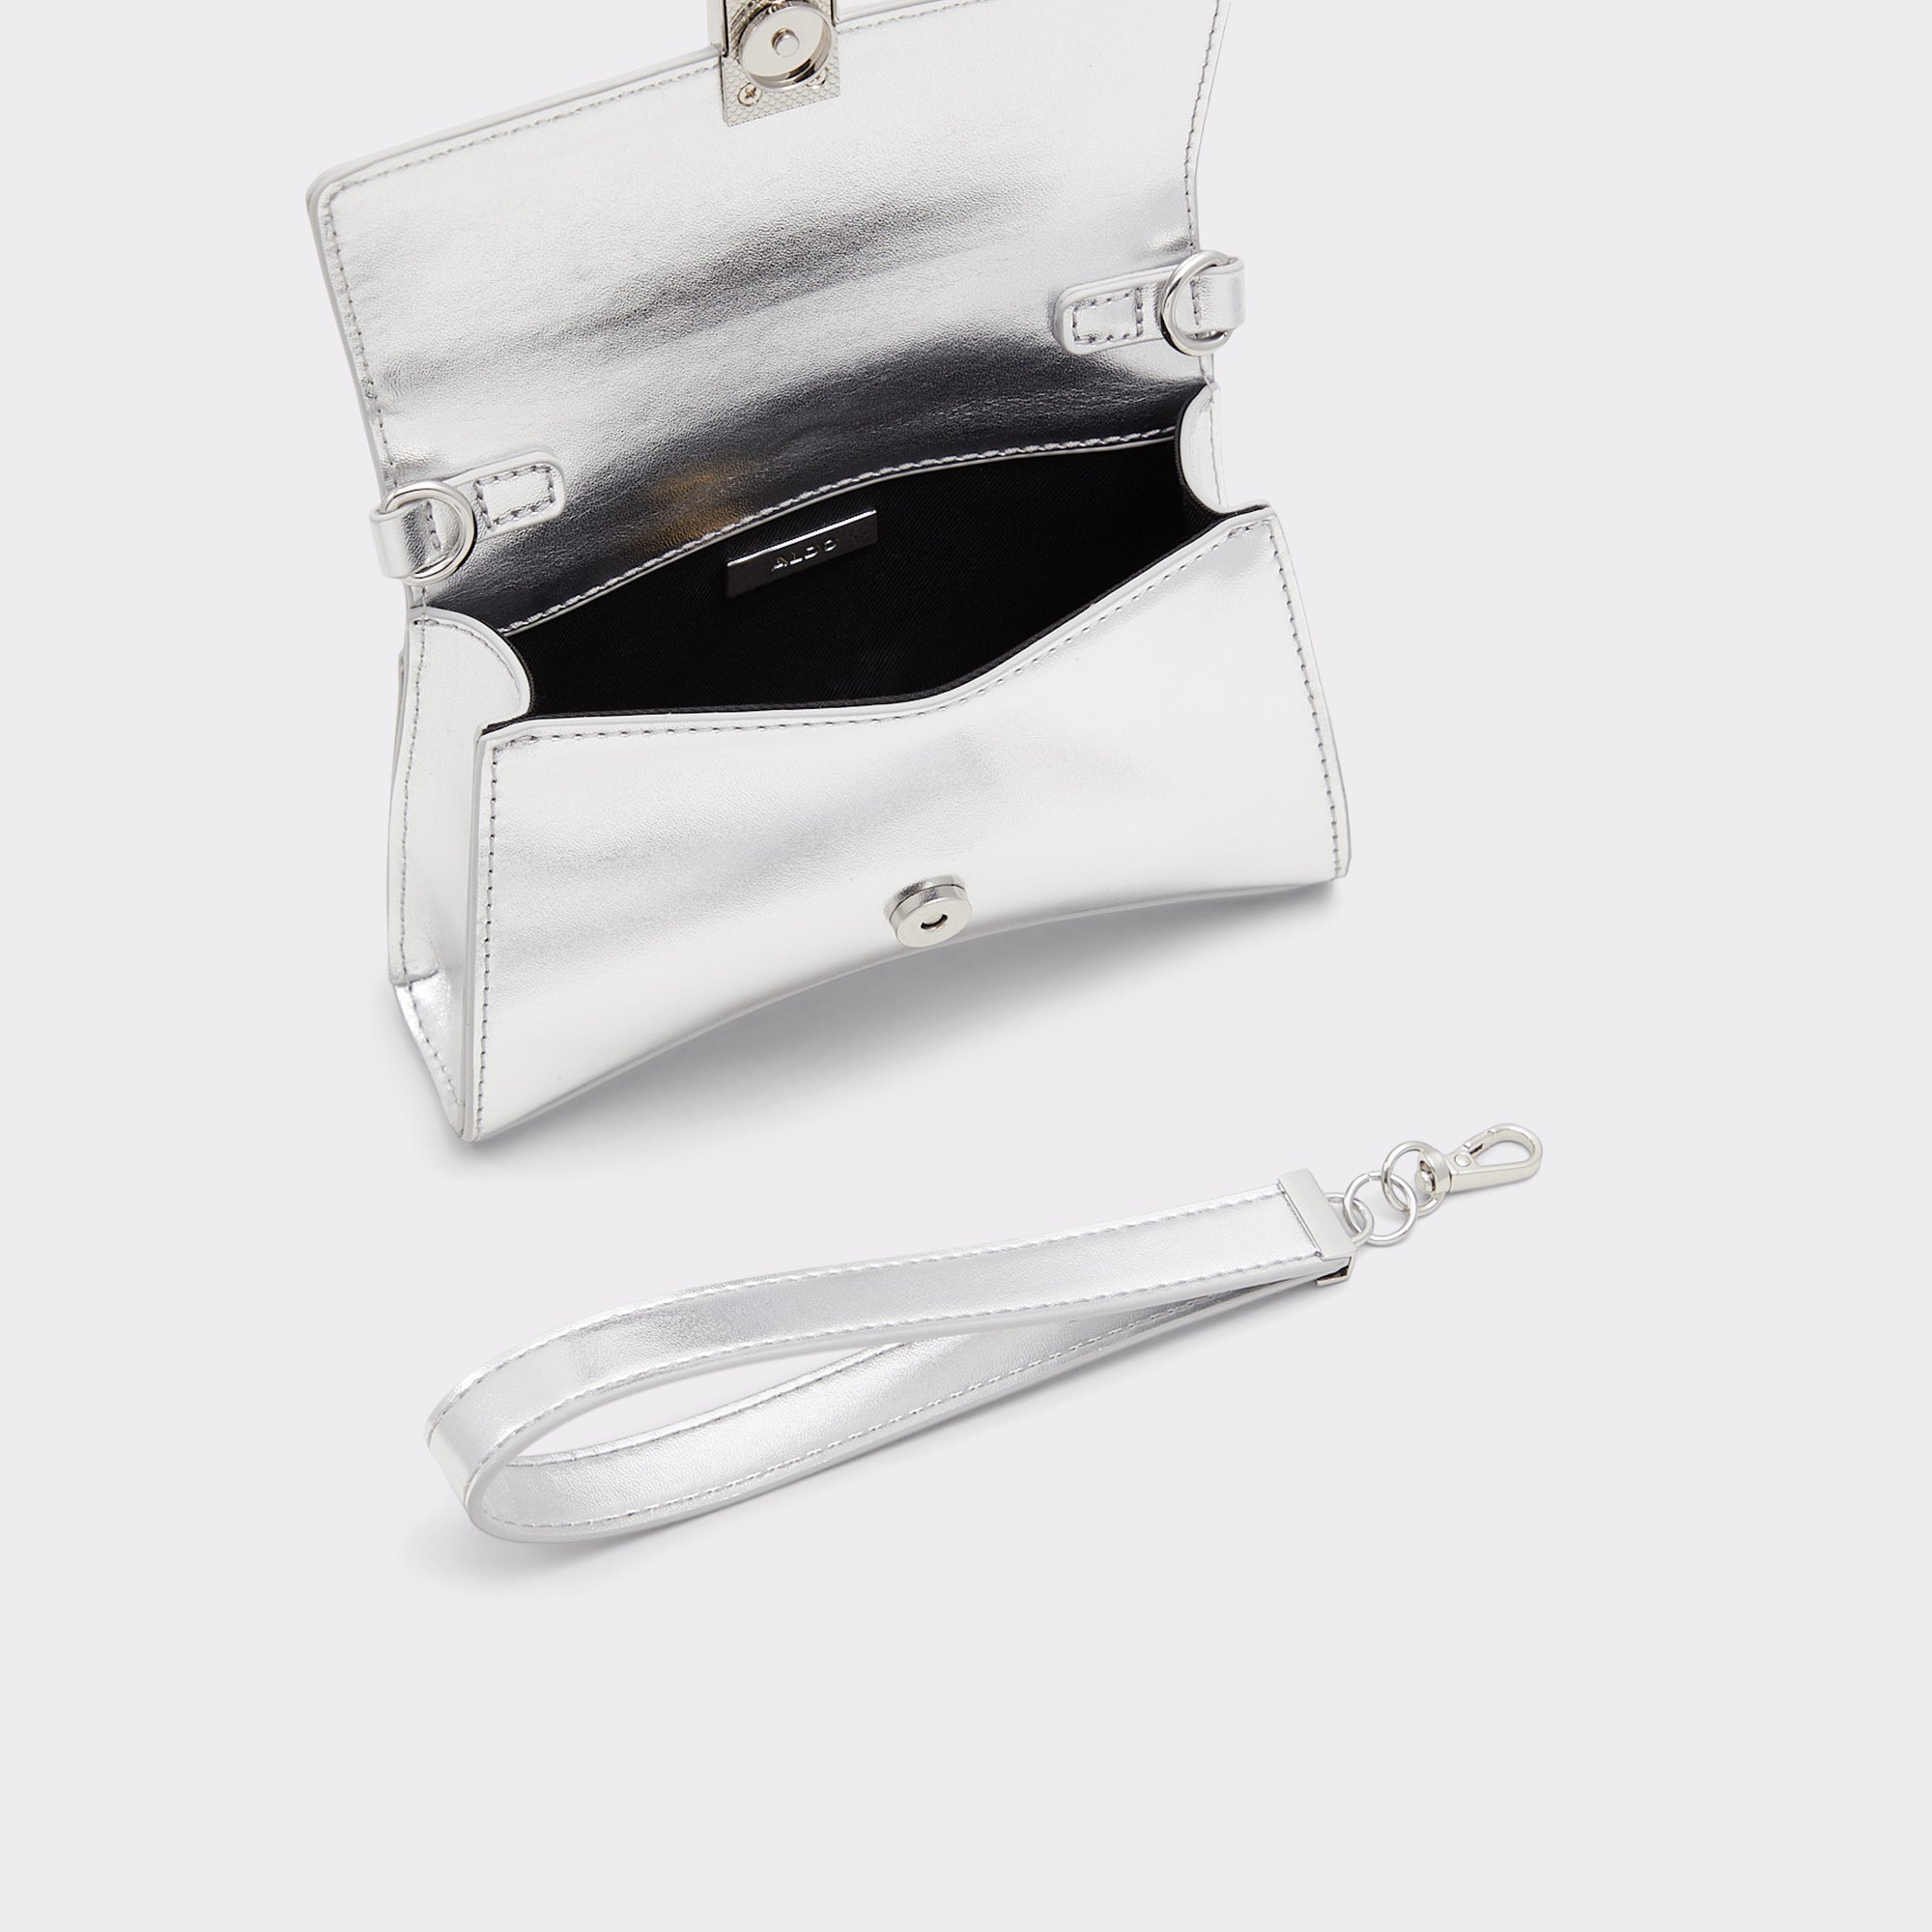 ALDO Piccaro Silver Metallic Crossbody Bag